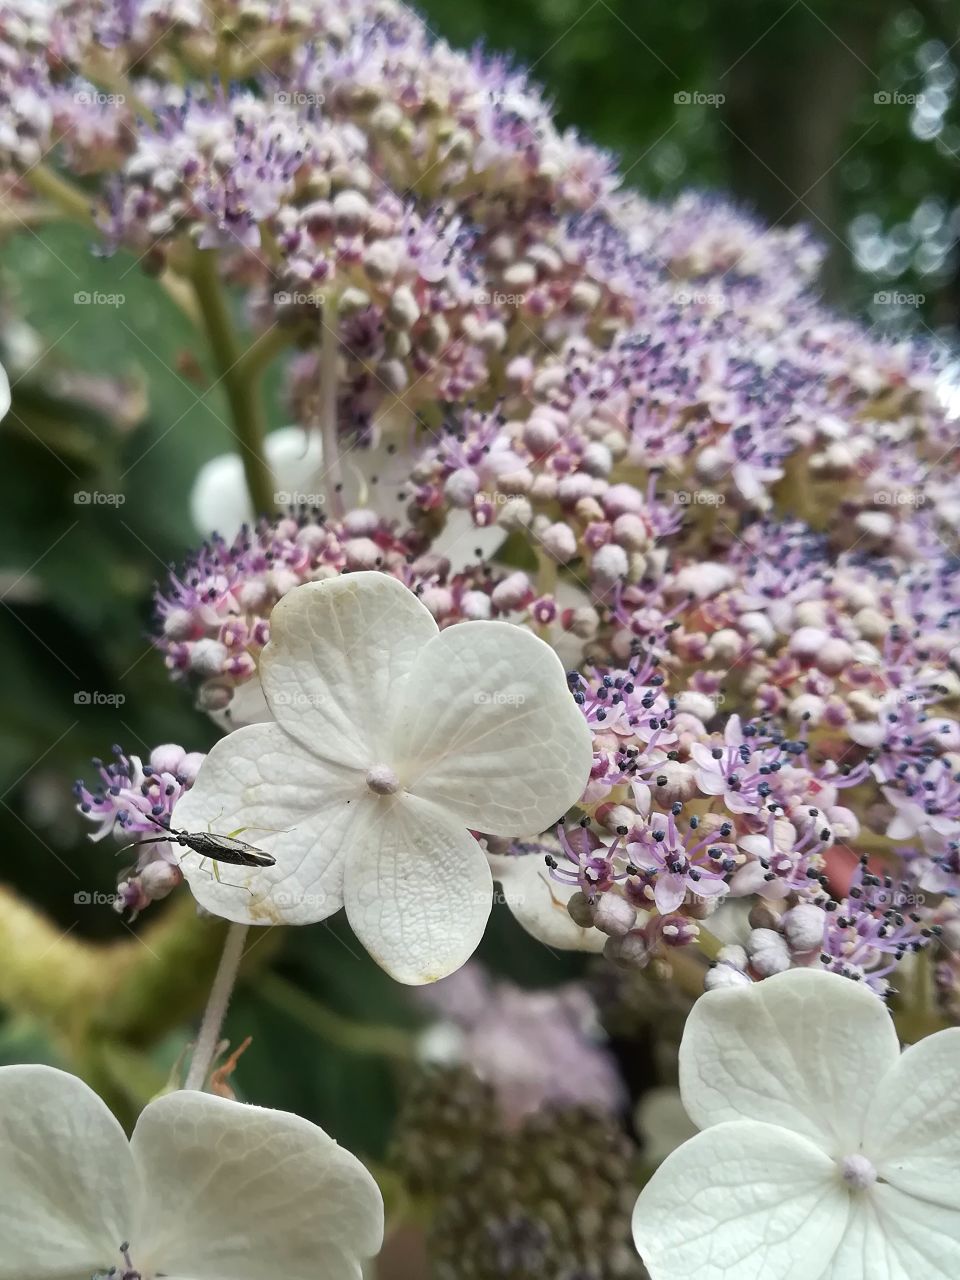 bug on the flower